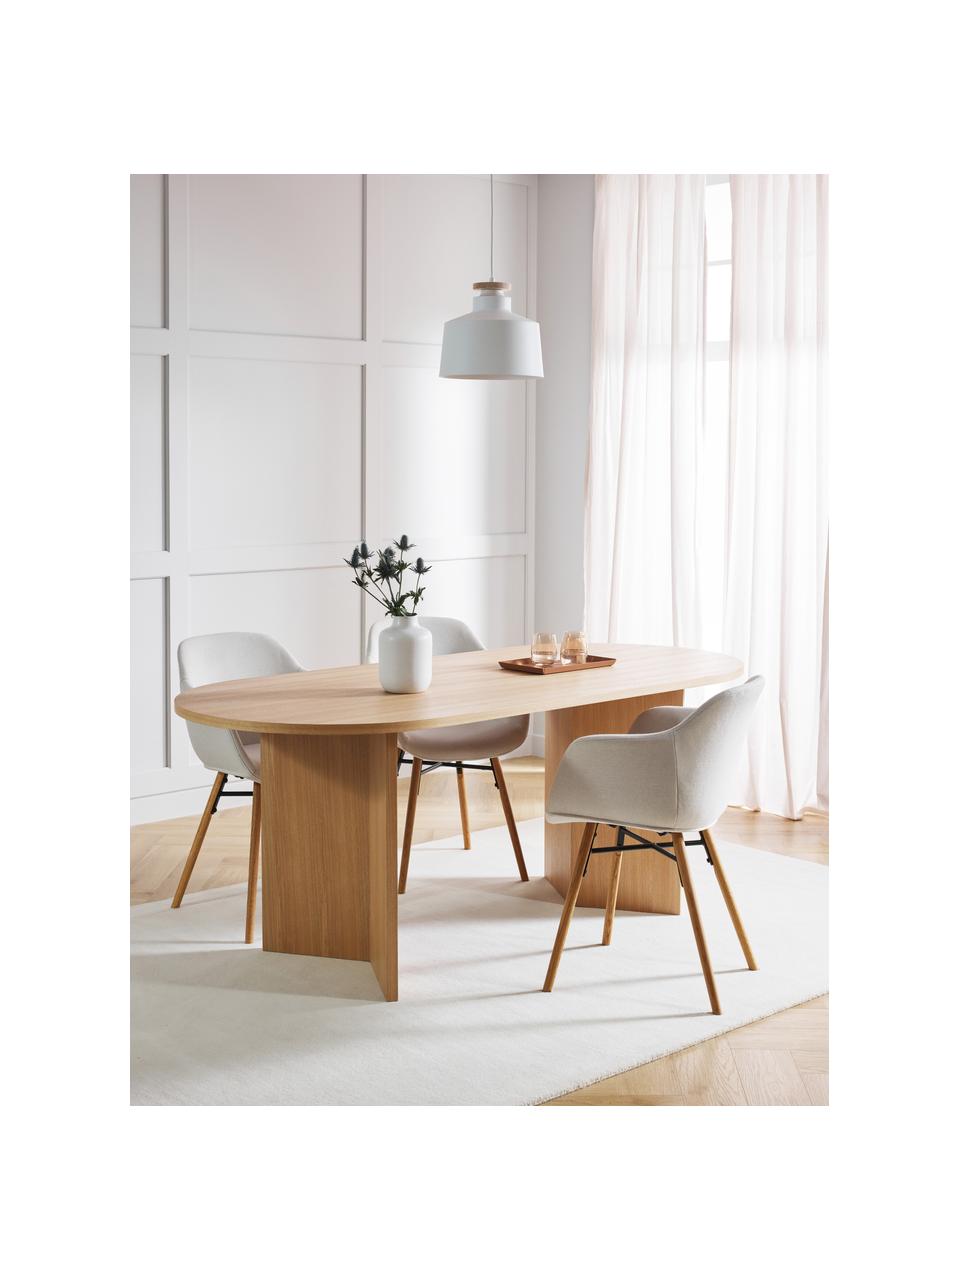 Oválny drevený jedálenský stôl Toni, 200 x 90 cm, MDF-doska strednej hustoty s jaseňovou dyhou, lakovaná, Jaseňové drevo, Š 200 x H 90 cm